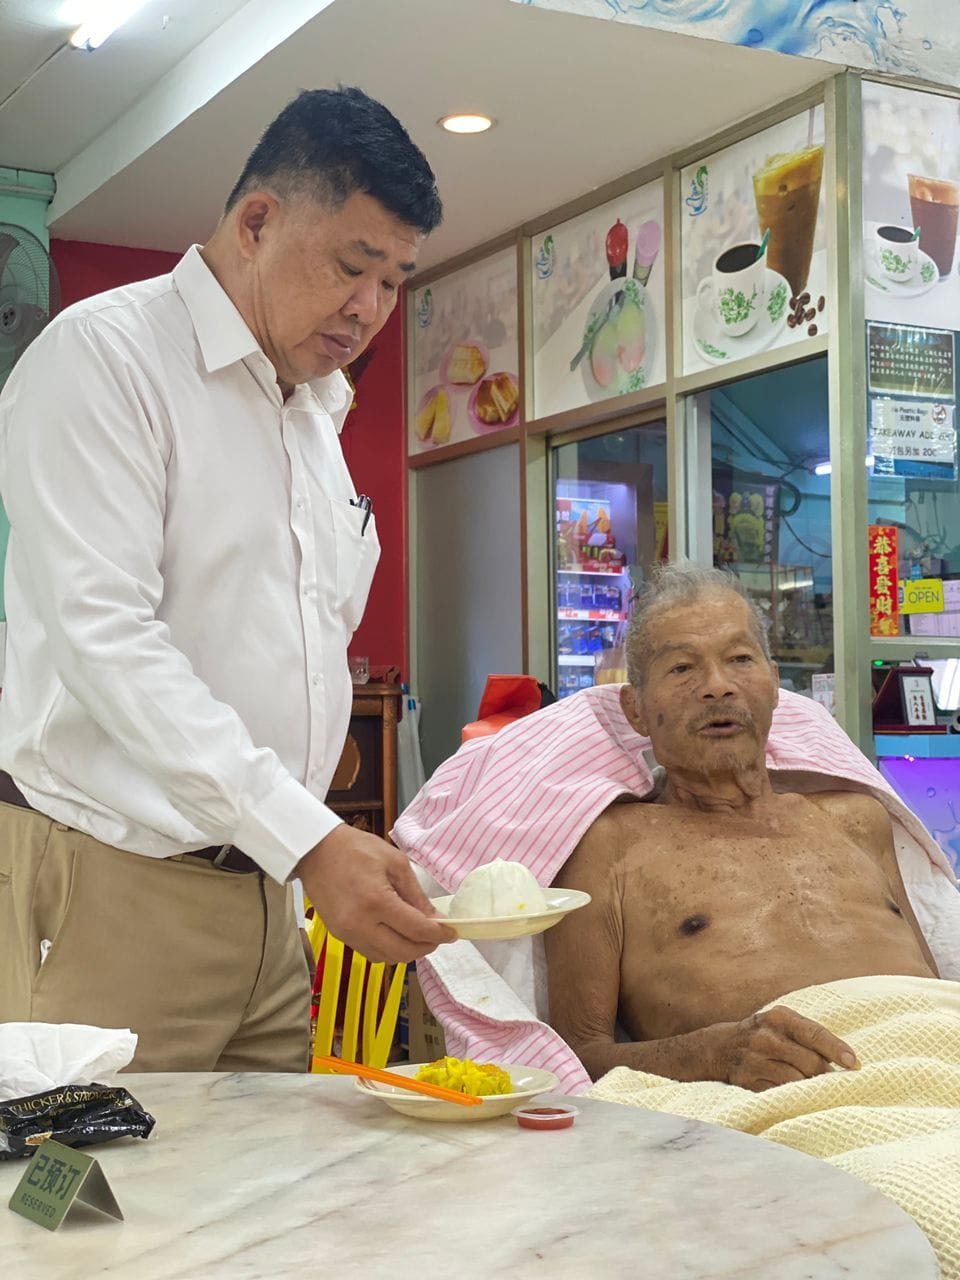 Uncle kentang feeding old man pau